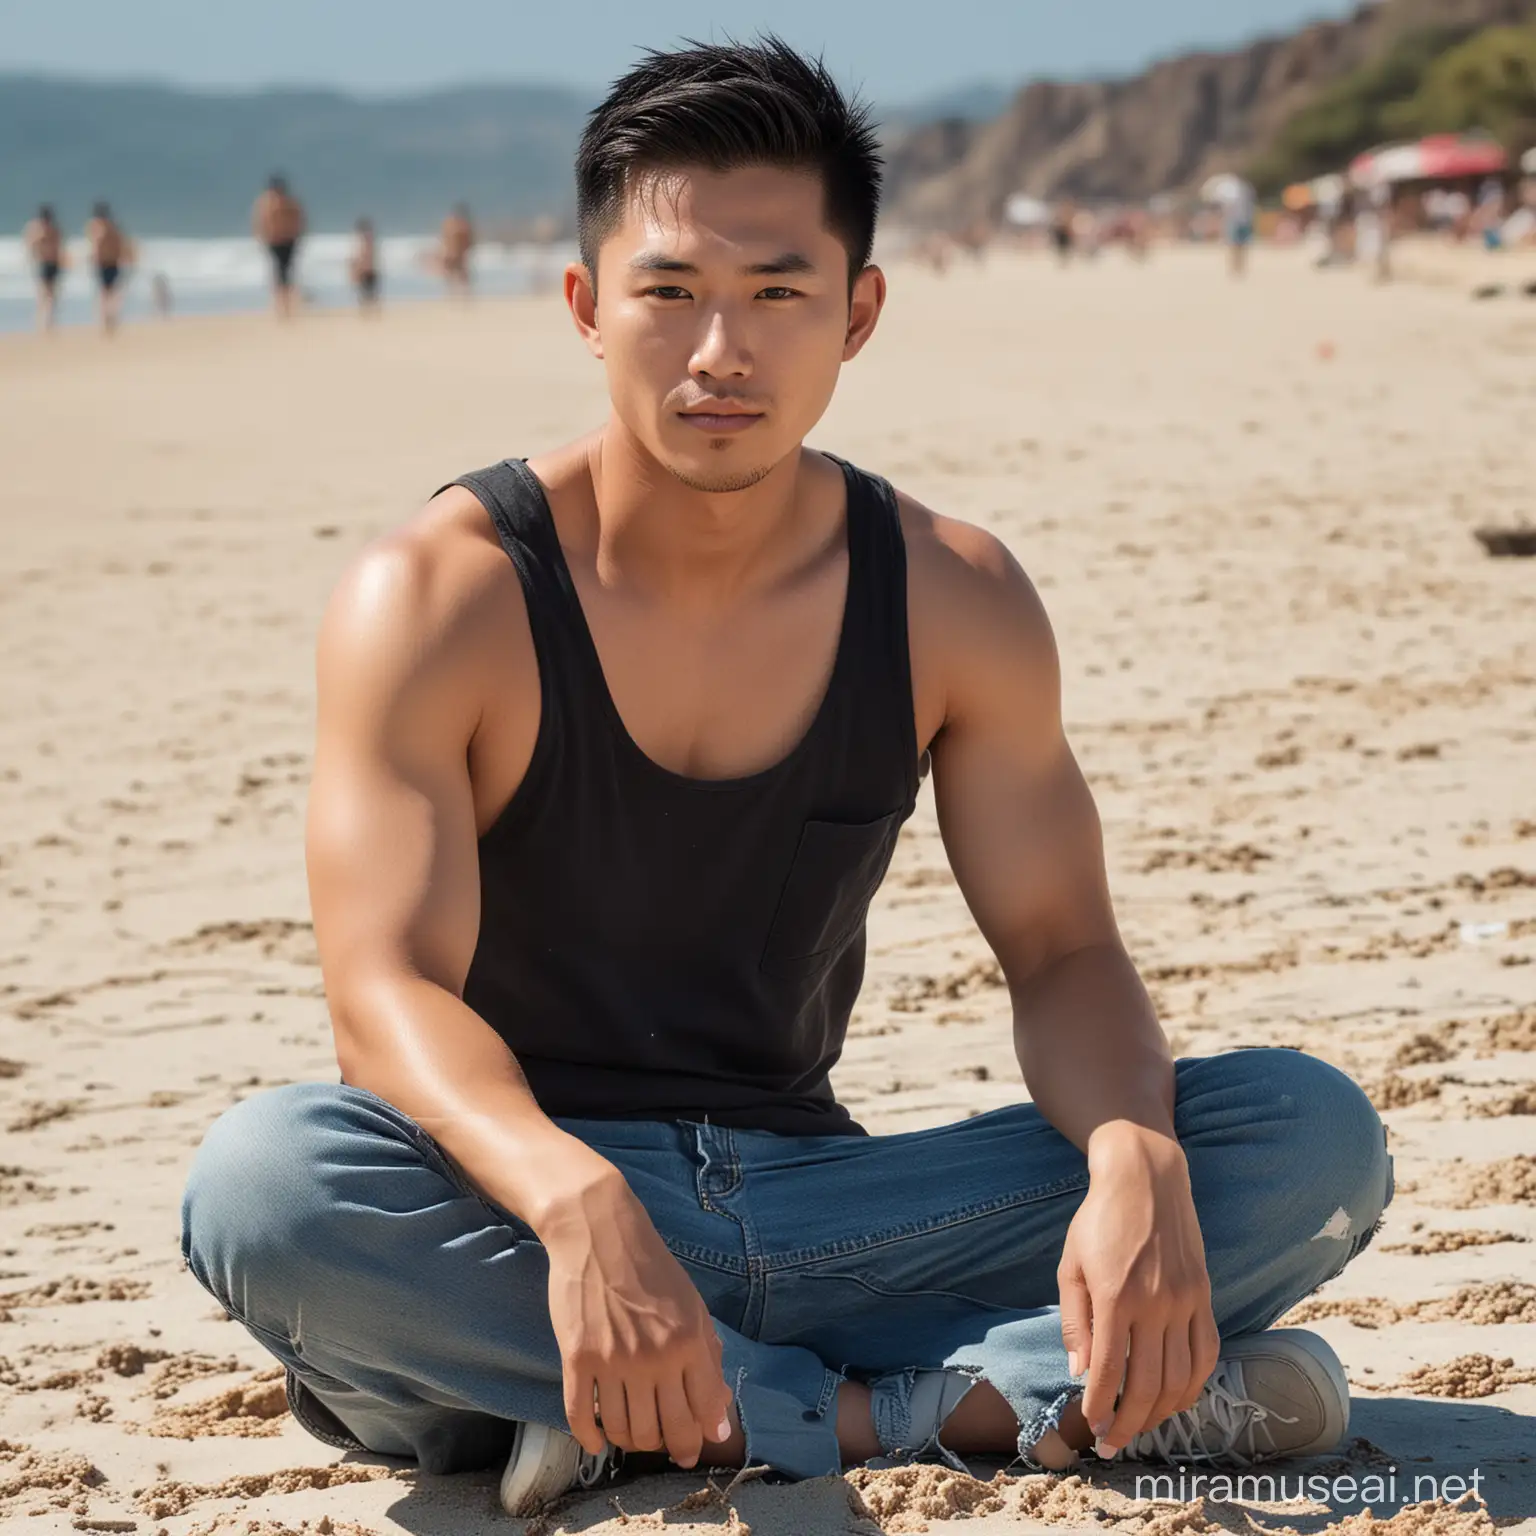 Asian Man Sitting on Beach in HighResolution Detail